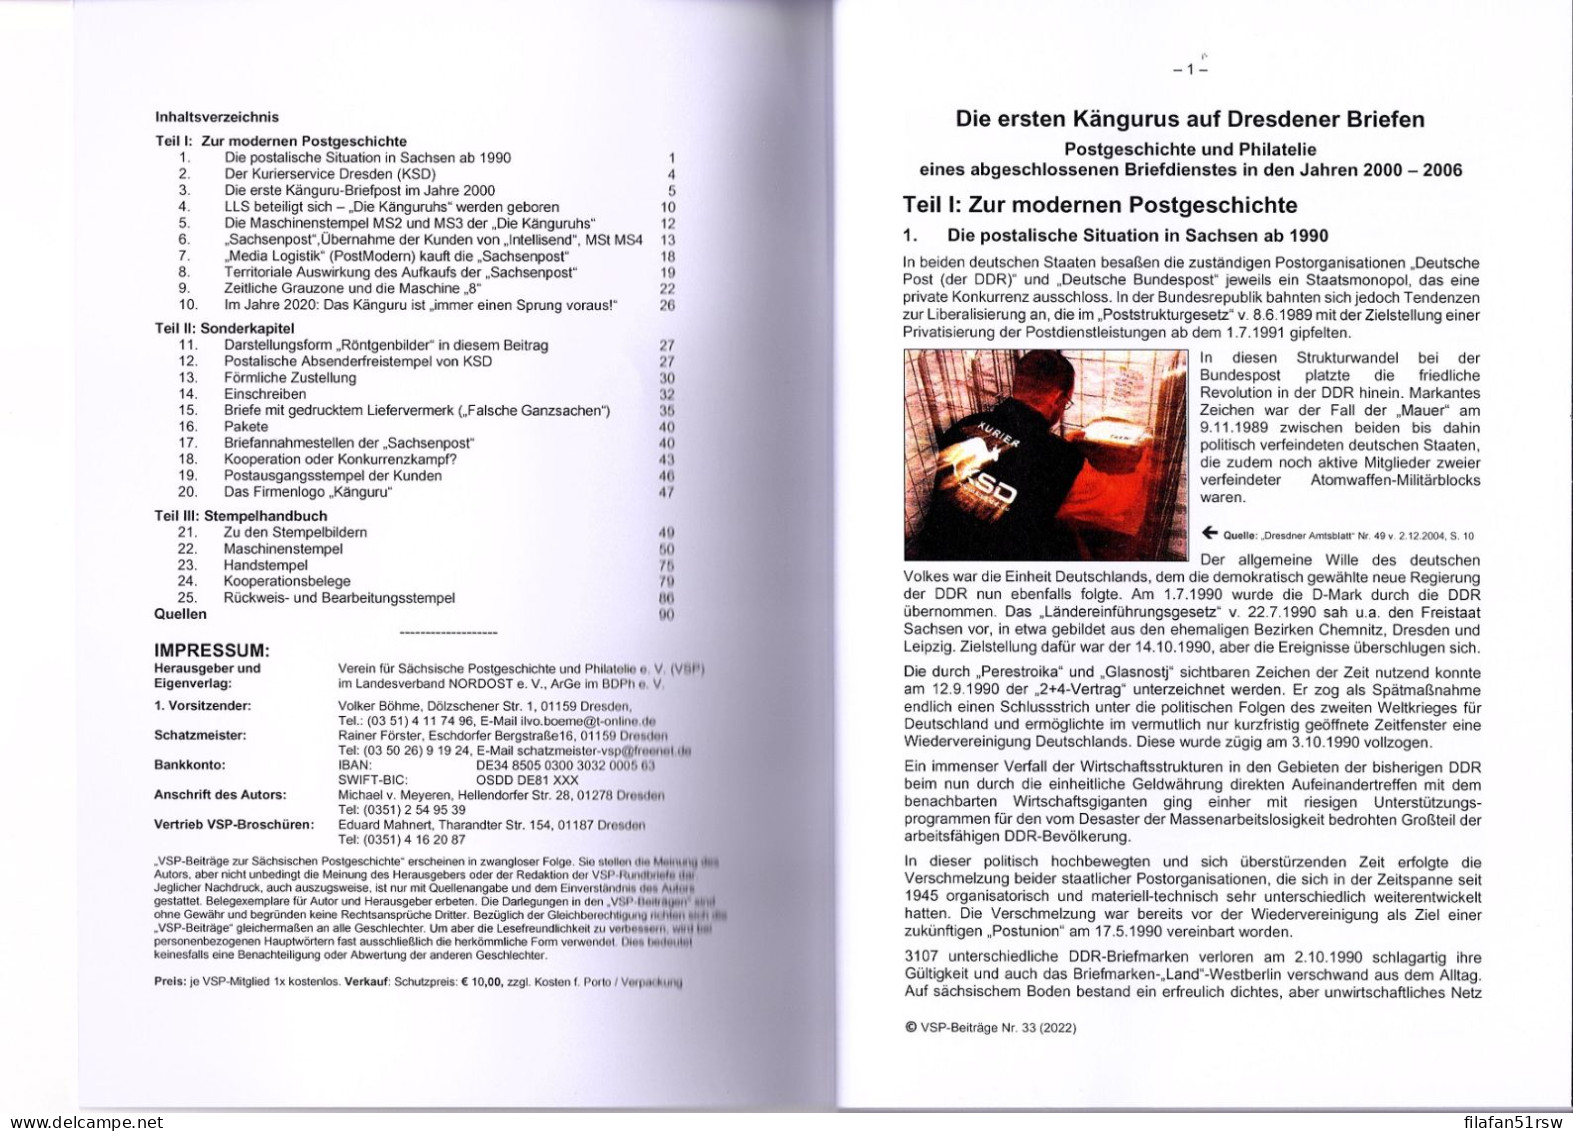 VSP - Beiträge Zur Sächs. Postgeschichte, Heft 33 (2022), KSD Kurier Känguruh Postsystem - Philatélie Et Histoire Postale